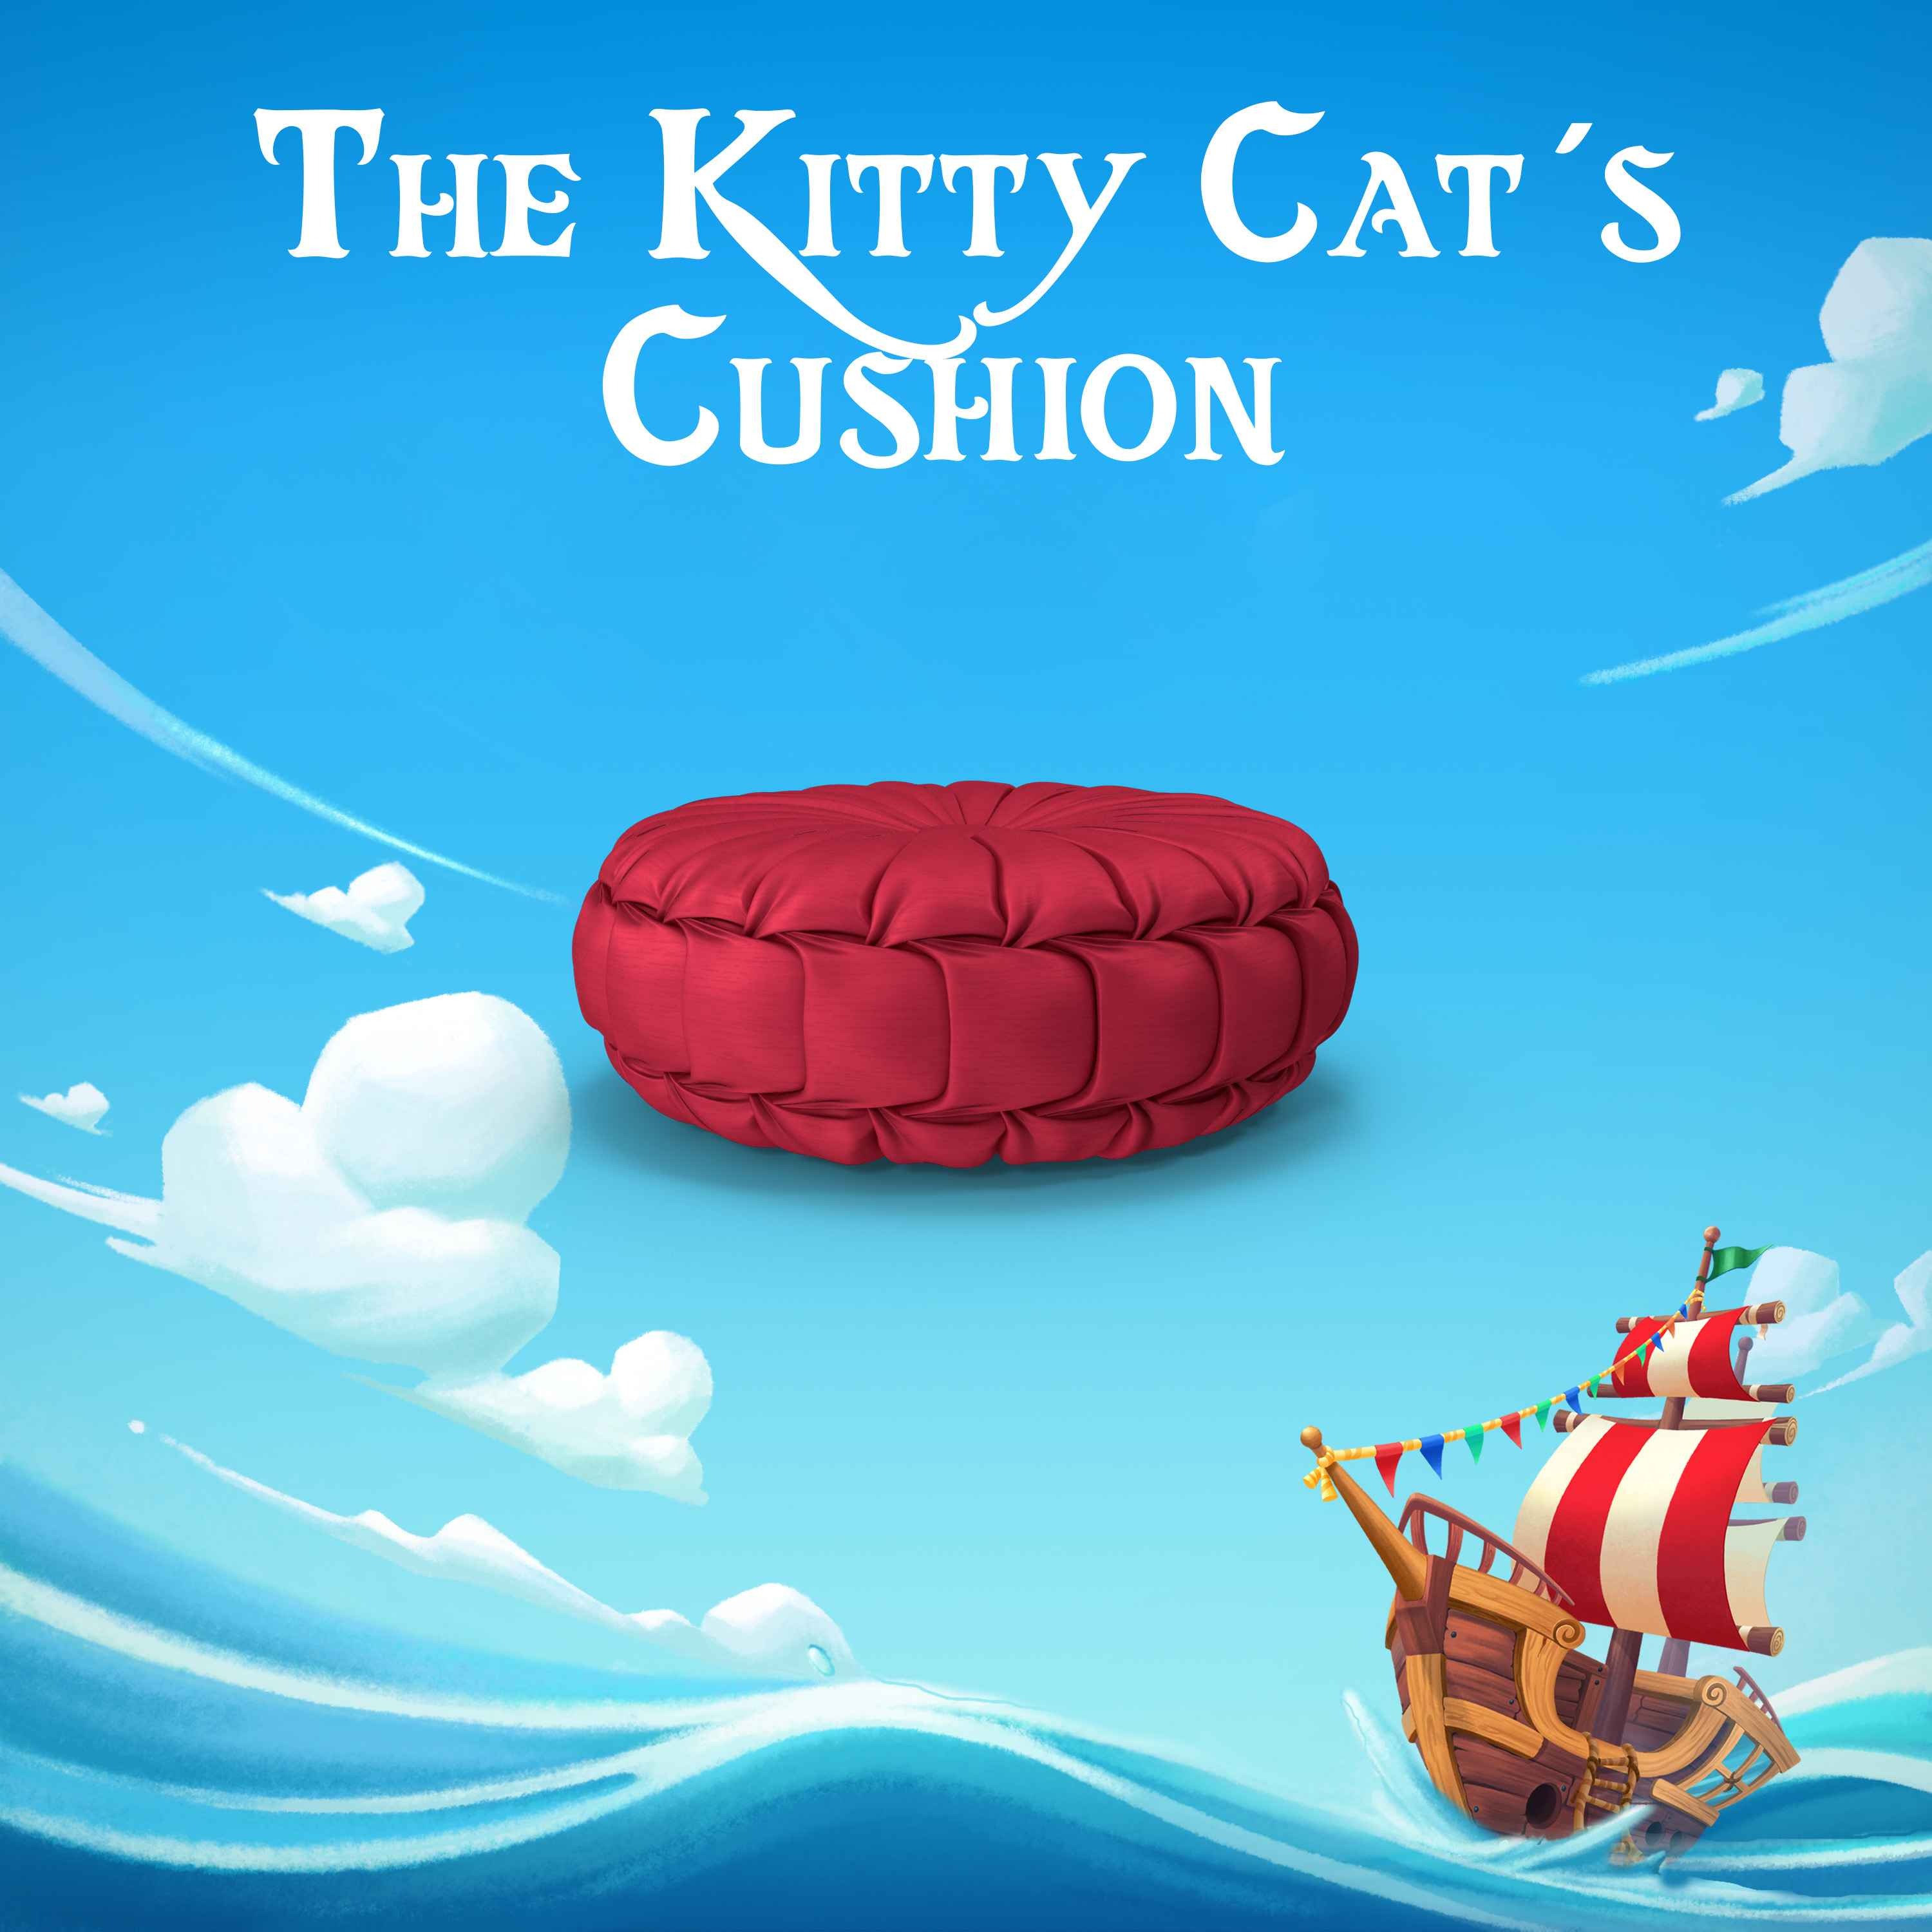 The Kitty Cat’s Cushion